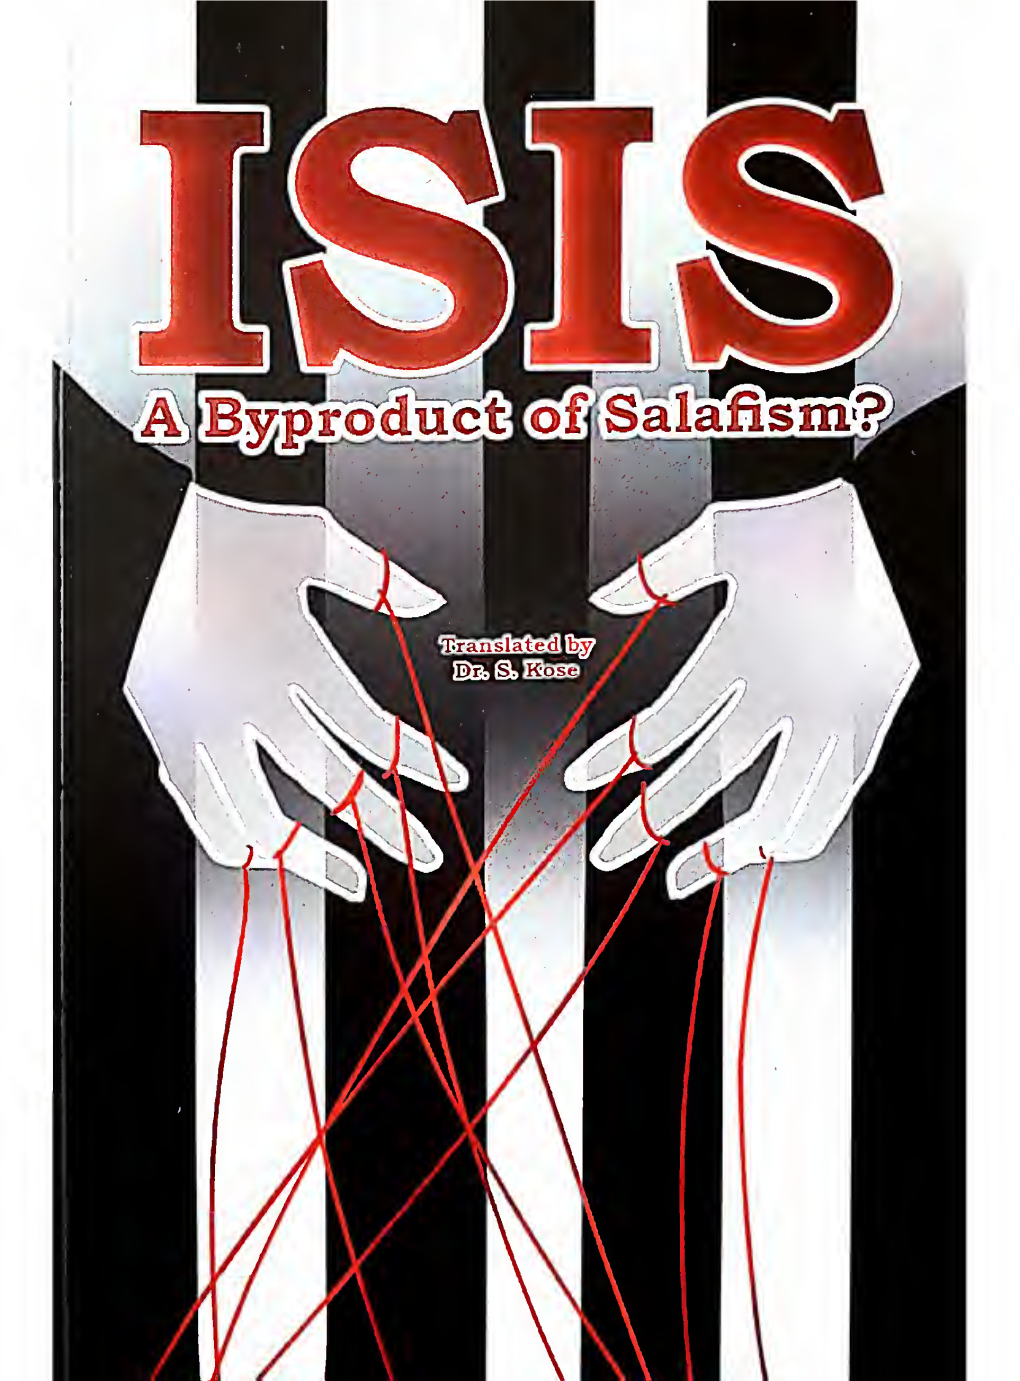 ISIS Salafism